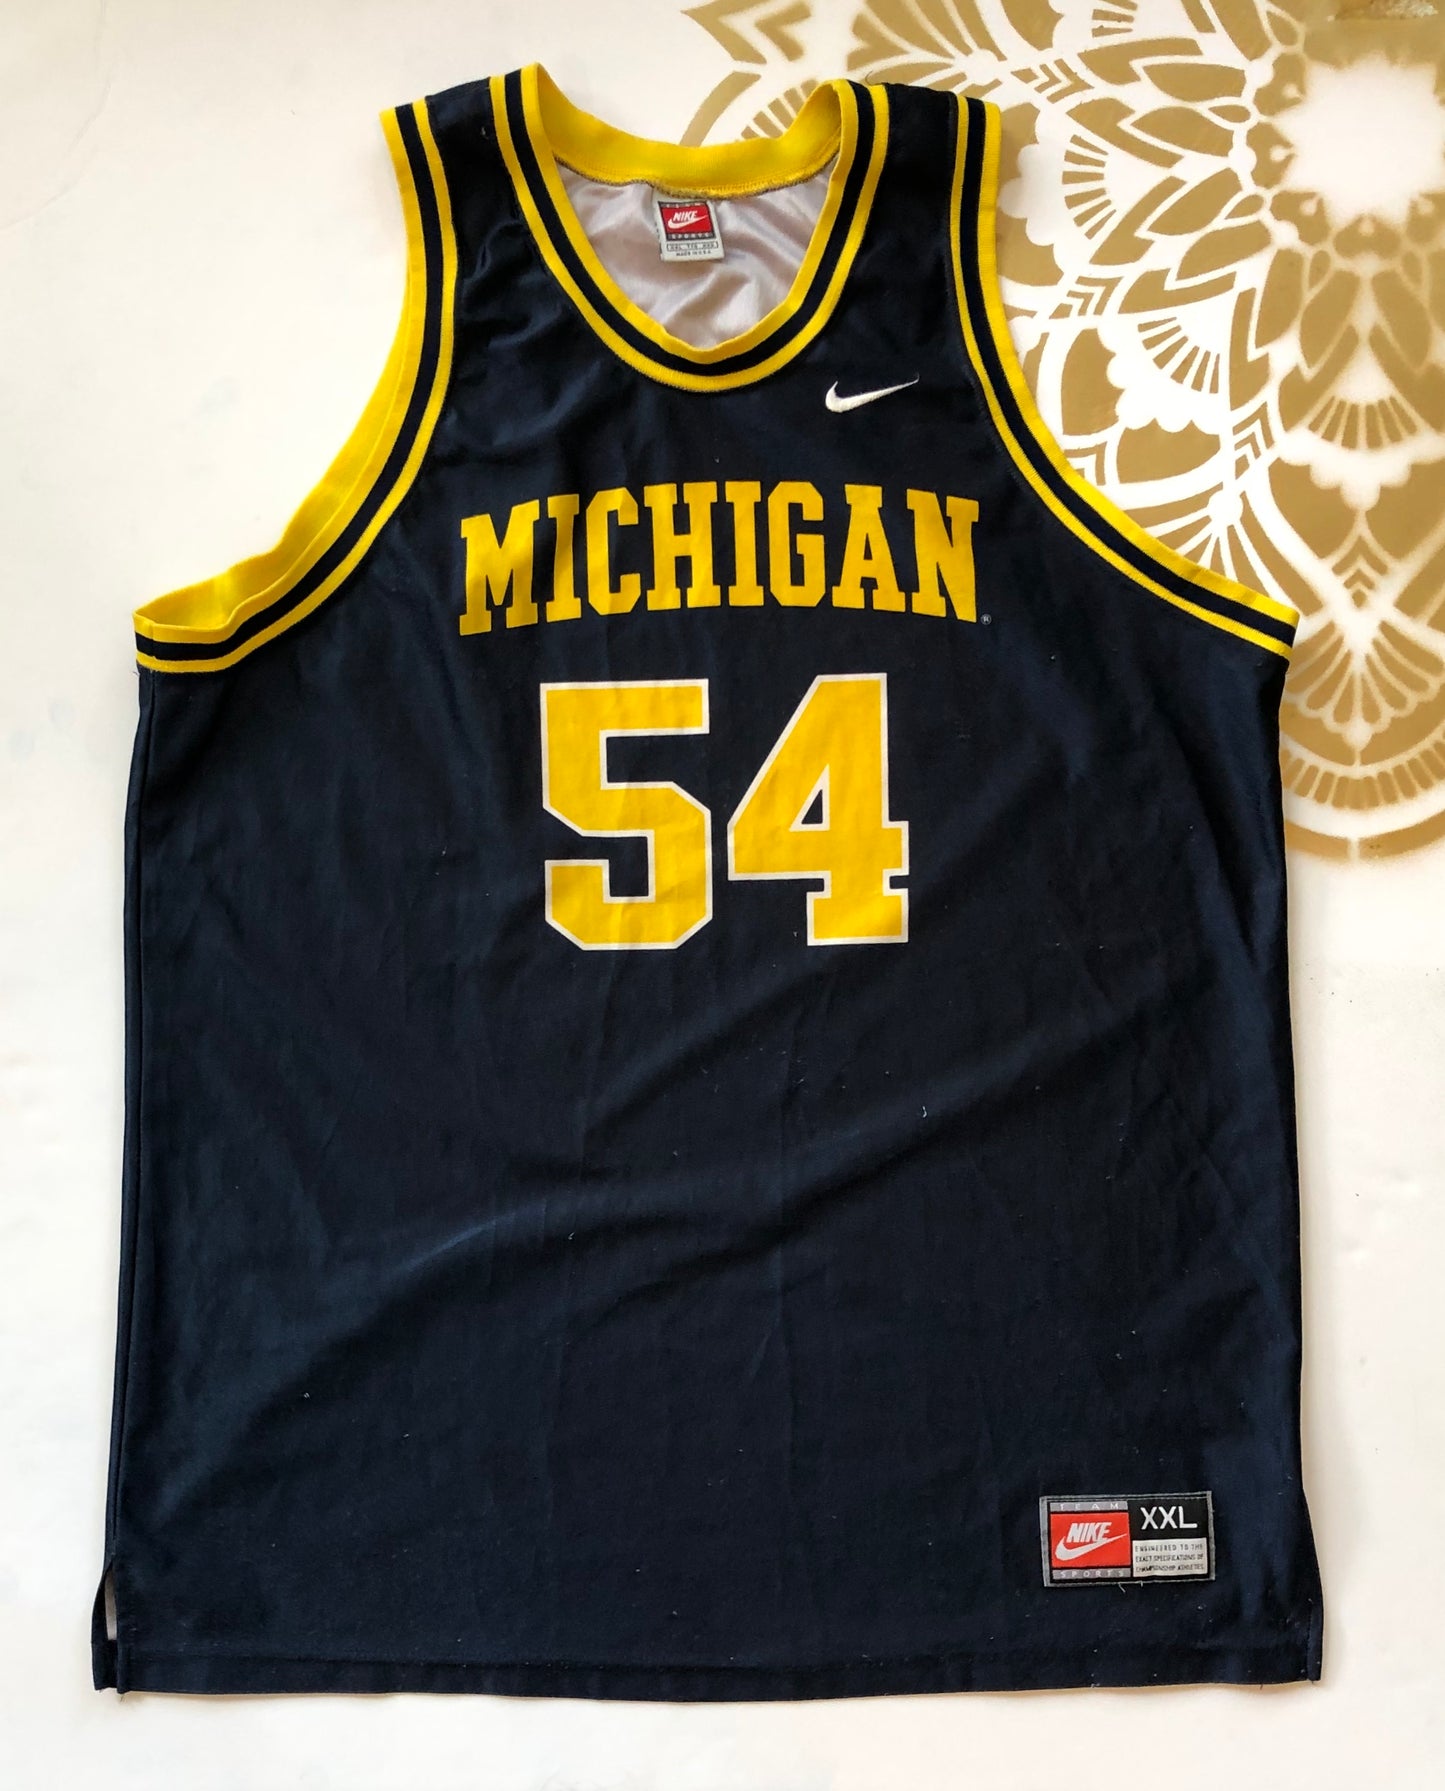 Michigan College Basketball Jersey - Ola Wyola